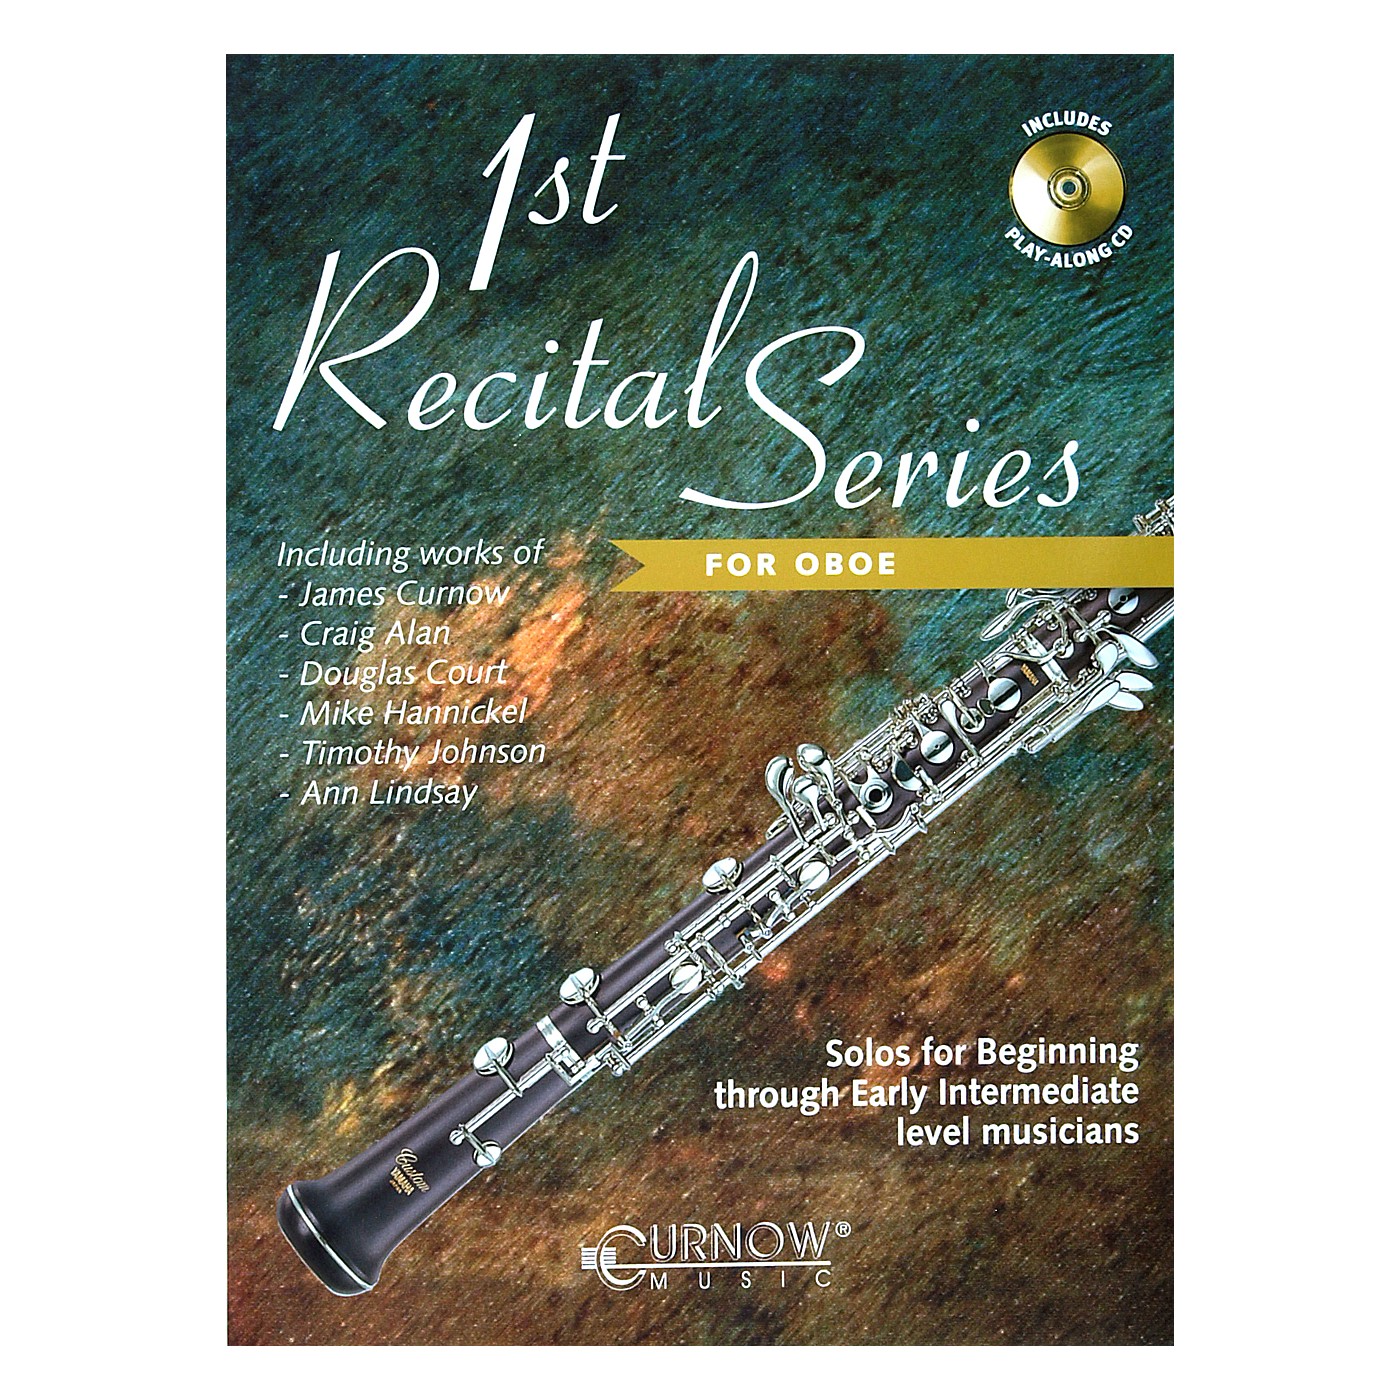 Hal Leonard Play-Along First Recital Series Book with CD thumbnail